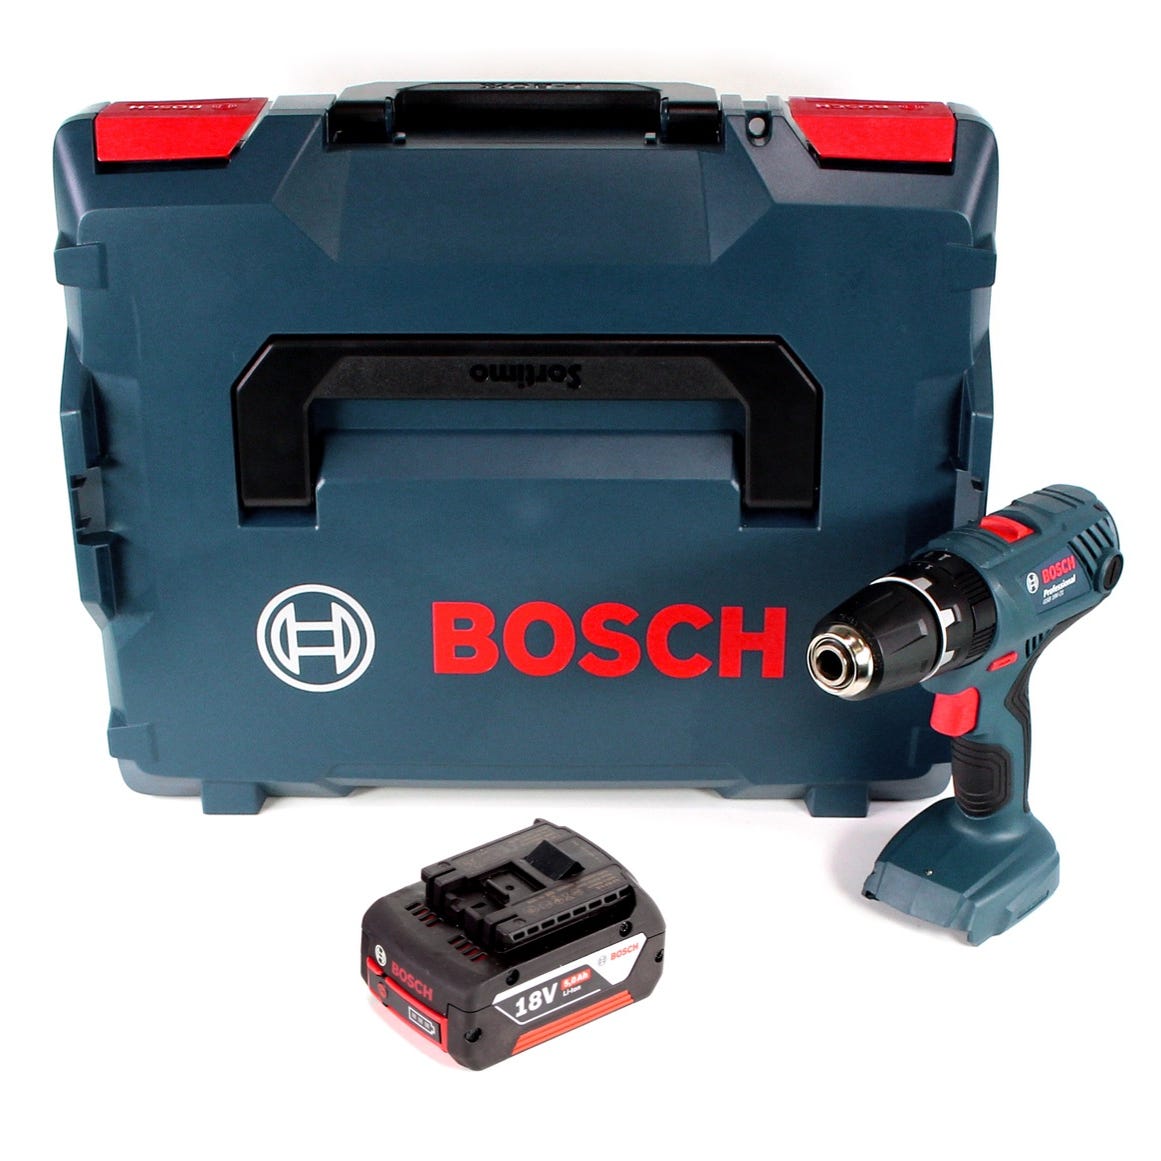 Bosch Professional GSB 18V-21 perceuse-visseuse à percussion sans